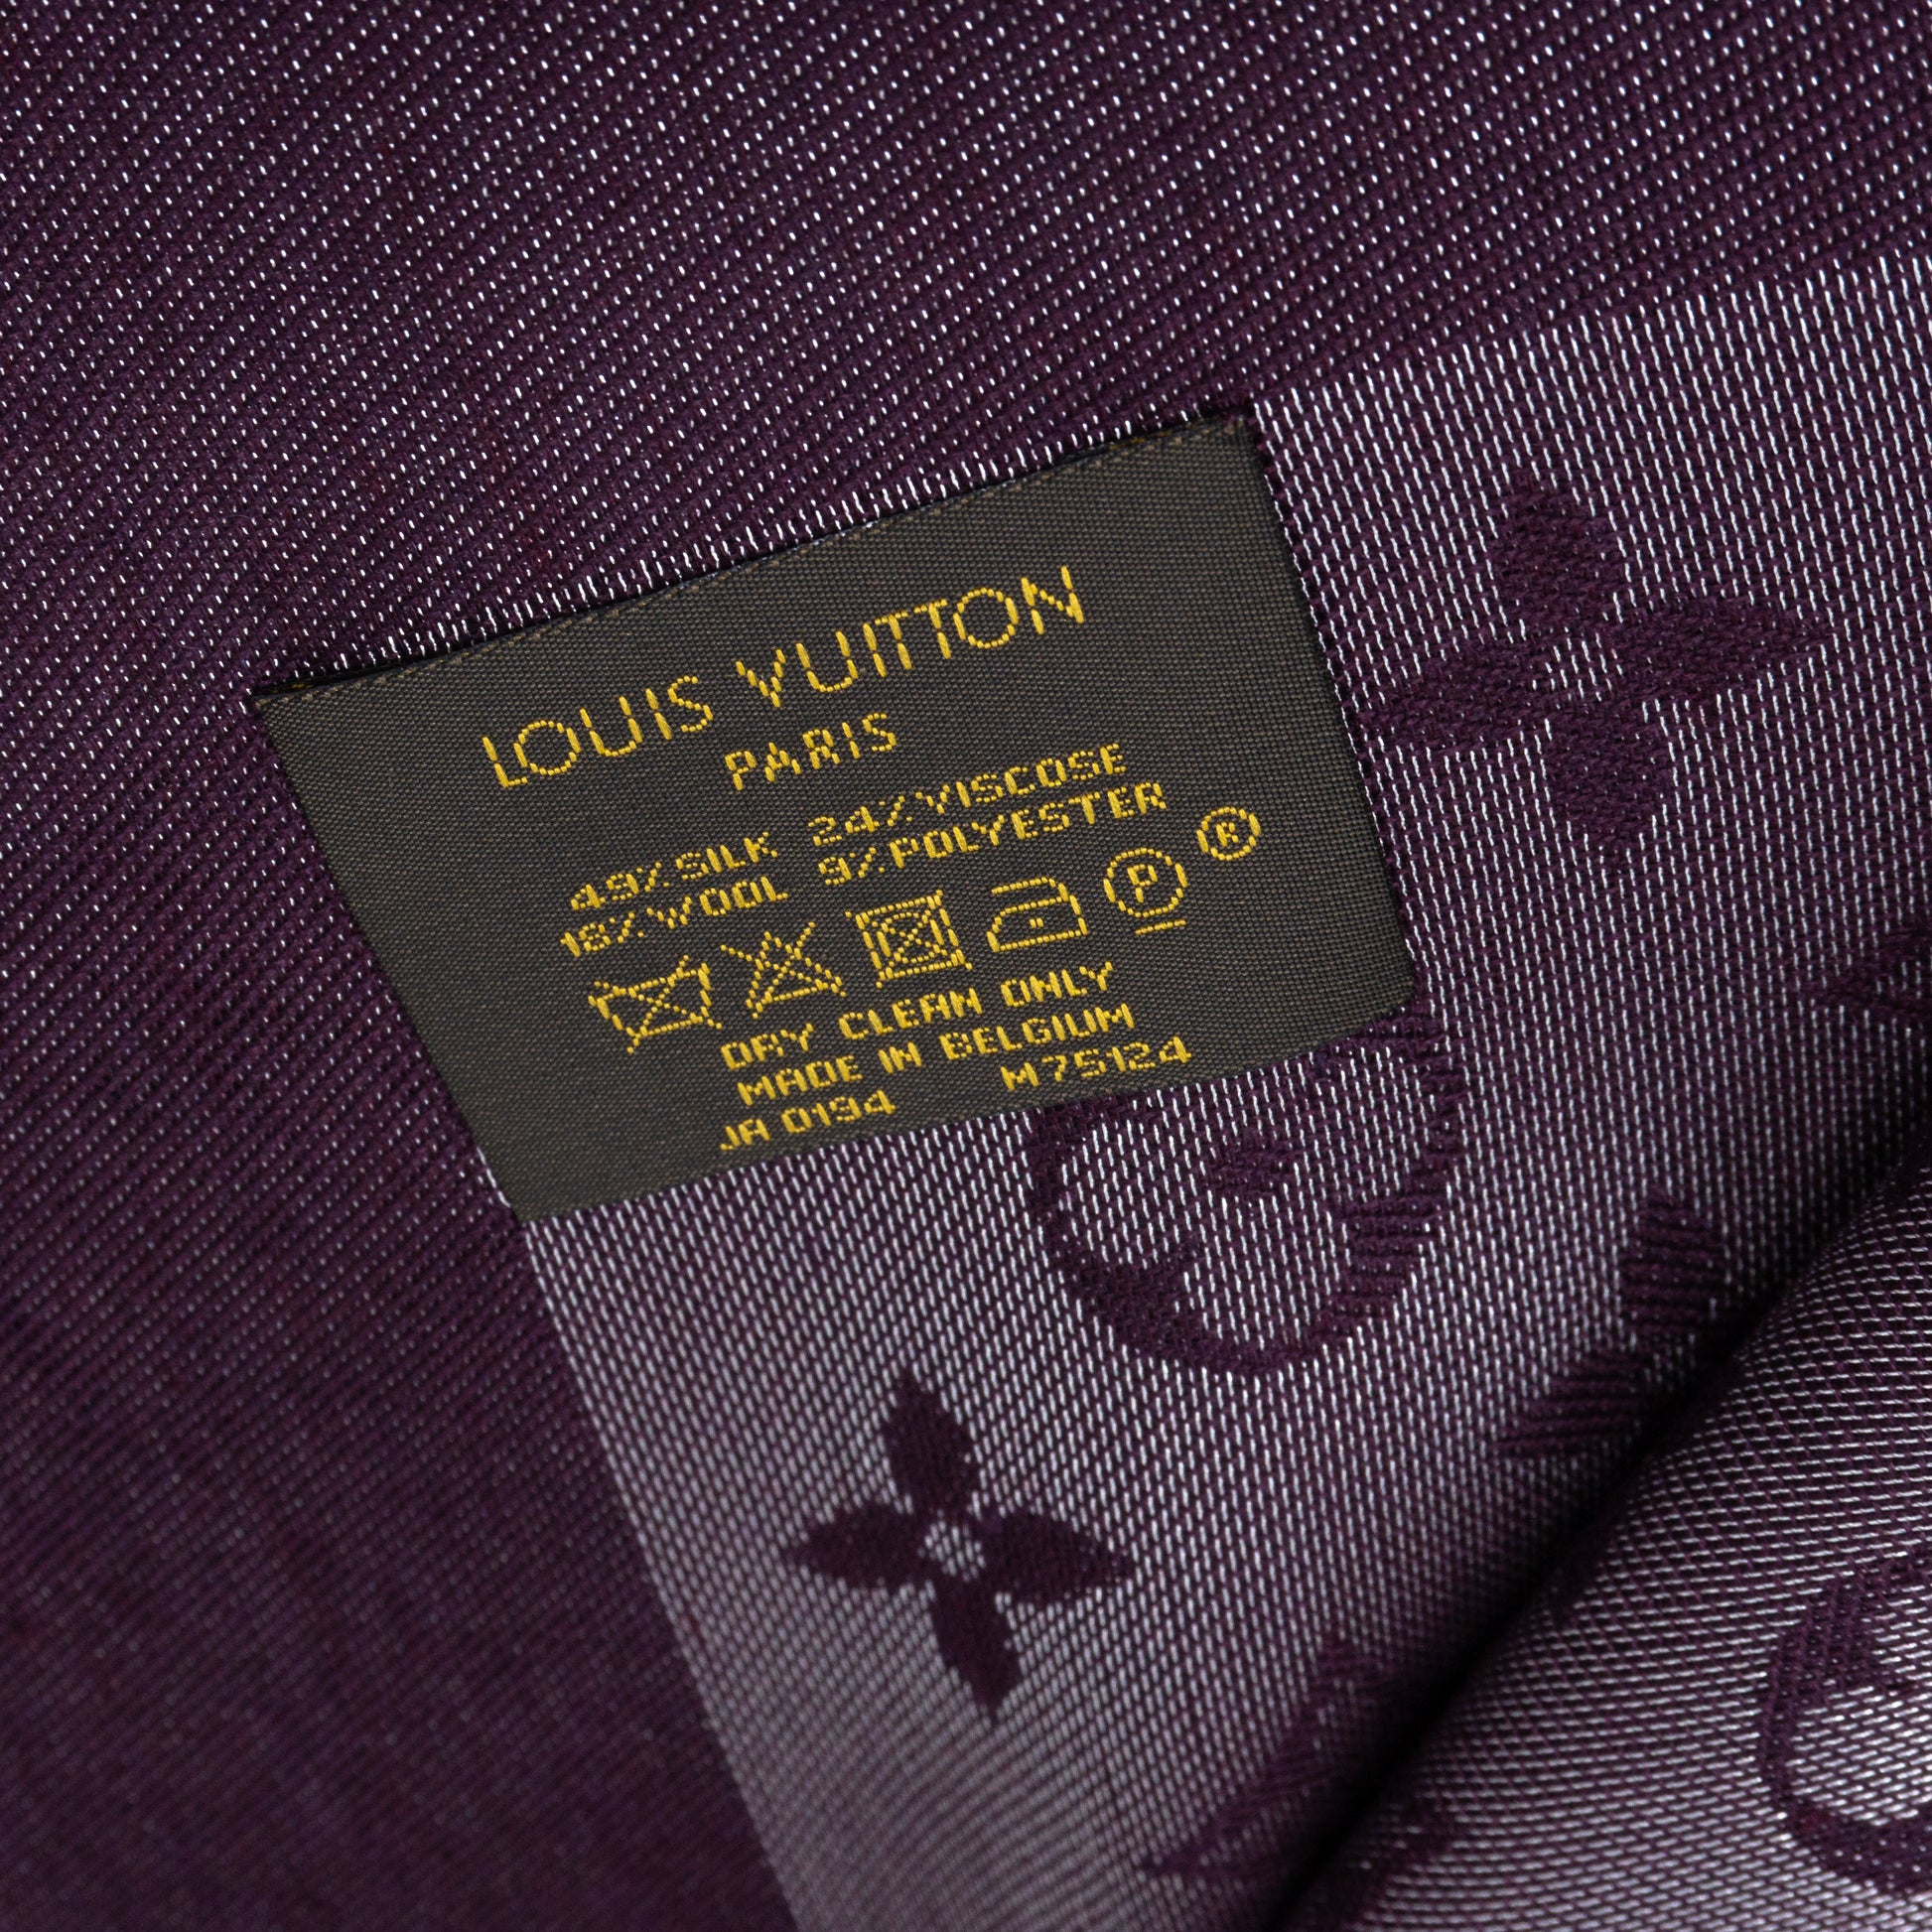 Louis Vuitton scarf made in Belgium?